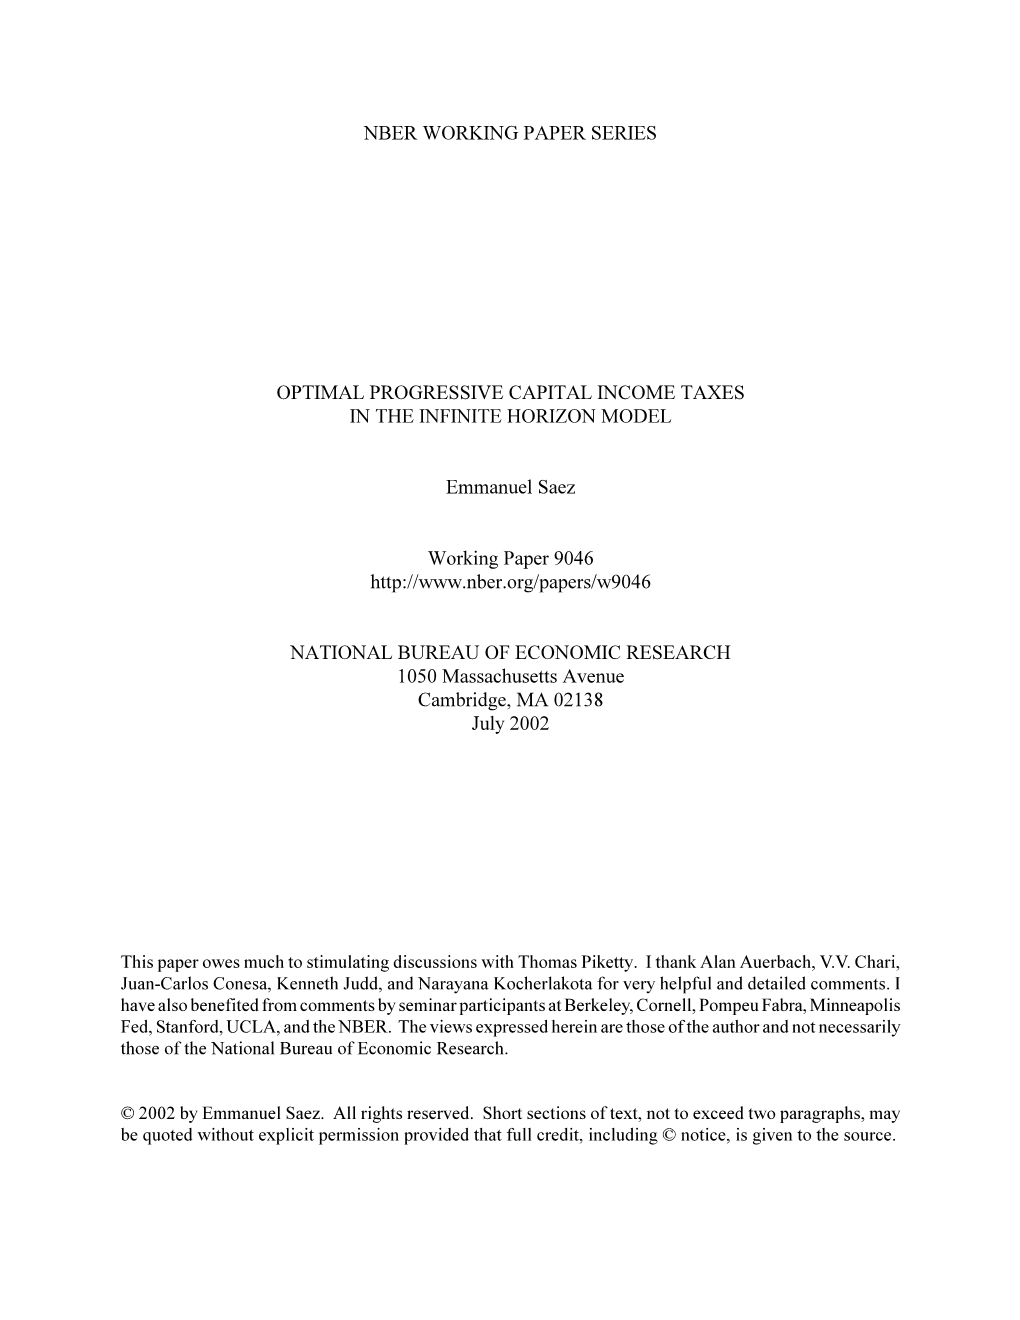 NBER WORKING PAPER SERIES OPTIMAL PROGRESSIVE CAPITAL INCOME TAXES in the INFINITE HORIZON MODEL Emmanuel Saez Working Paper